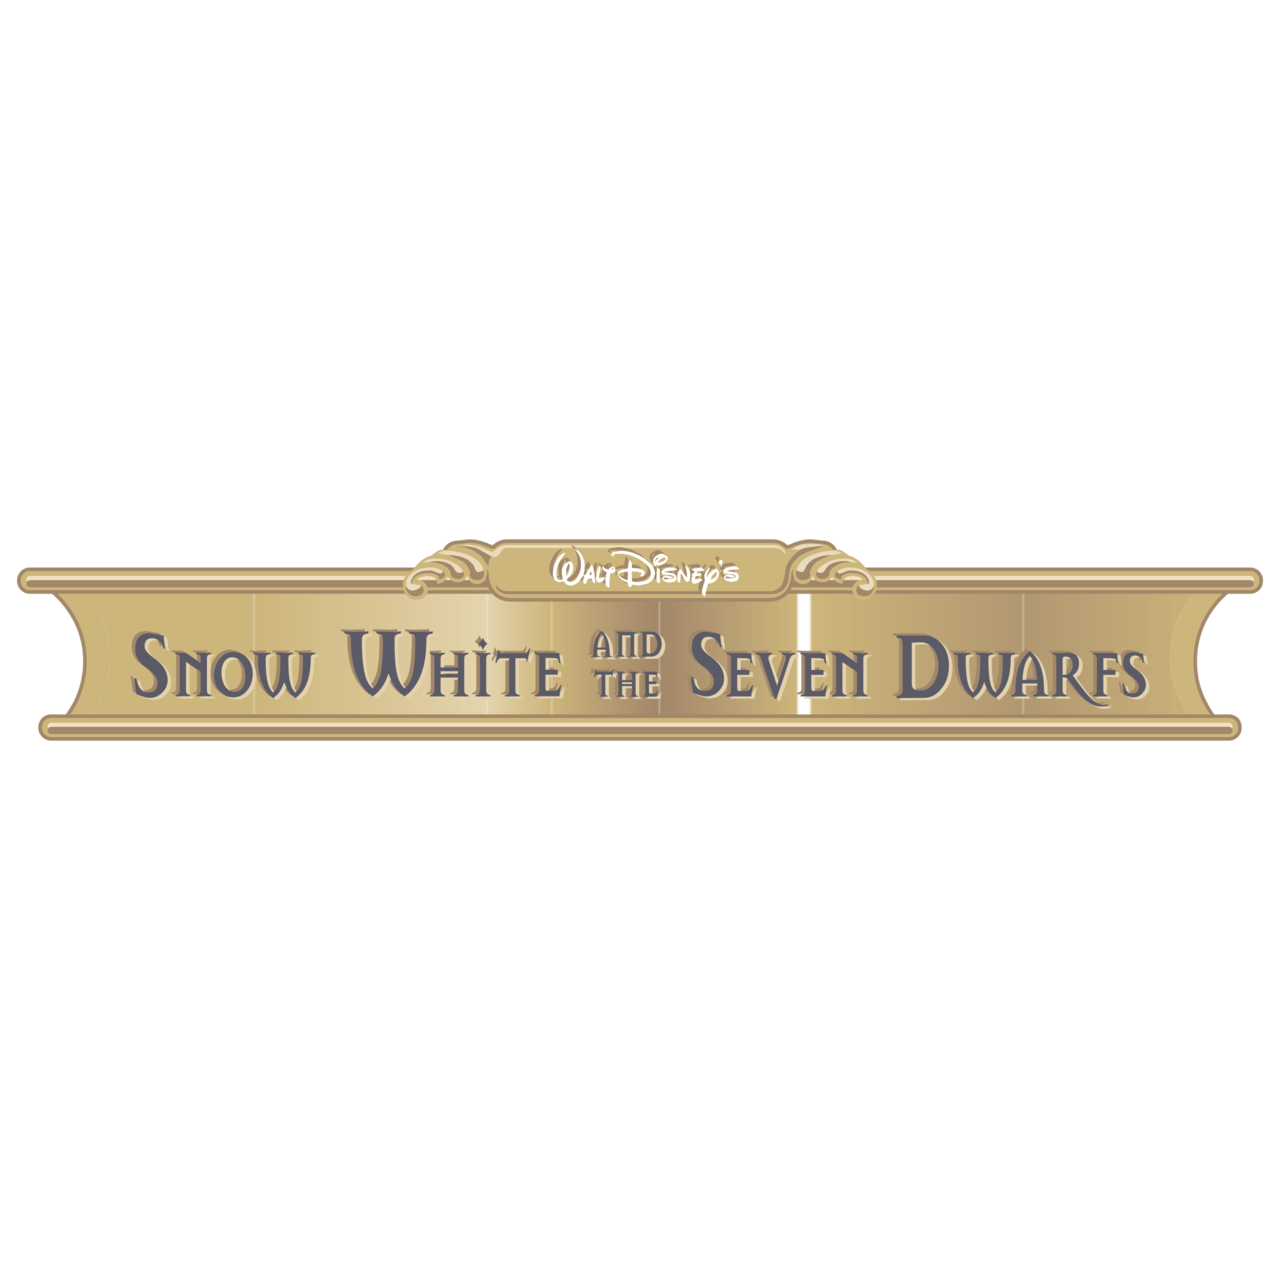 Sleepy Disney Clipart Snow White And The Seven Dwarfs